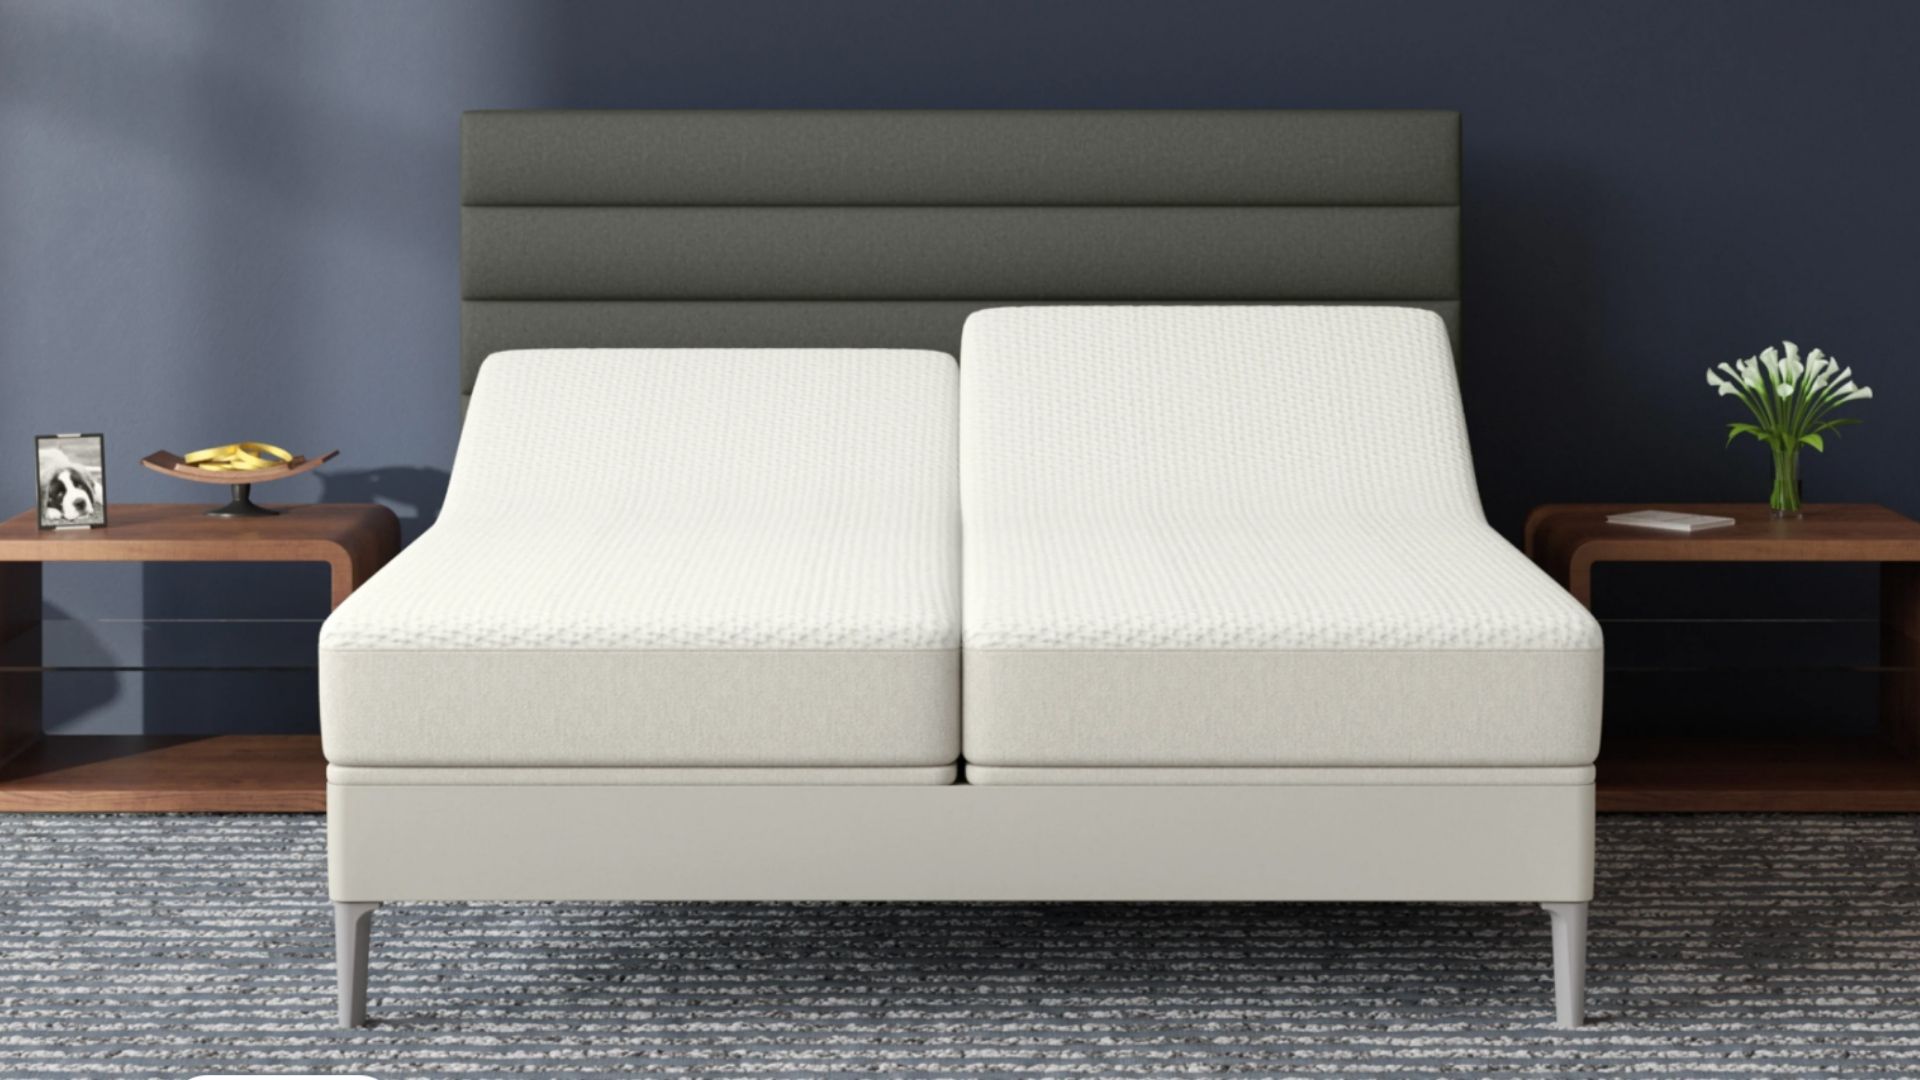 Best Split Adjustable Bed